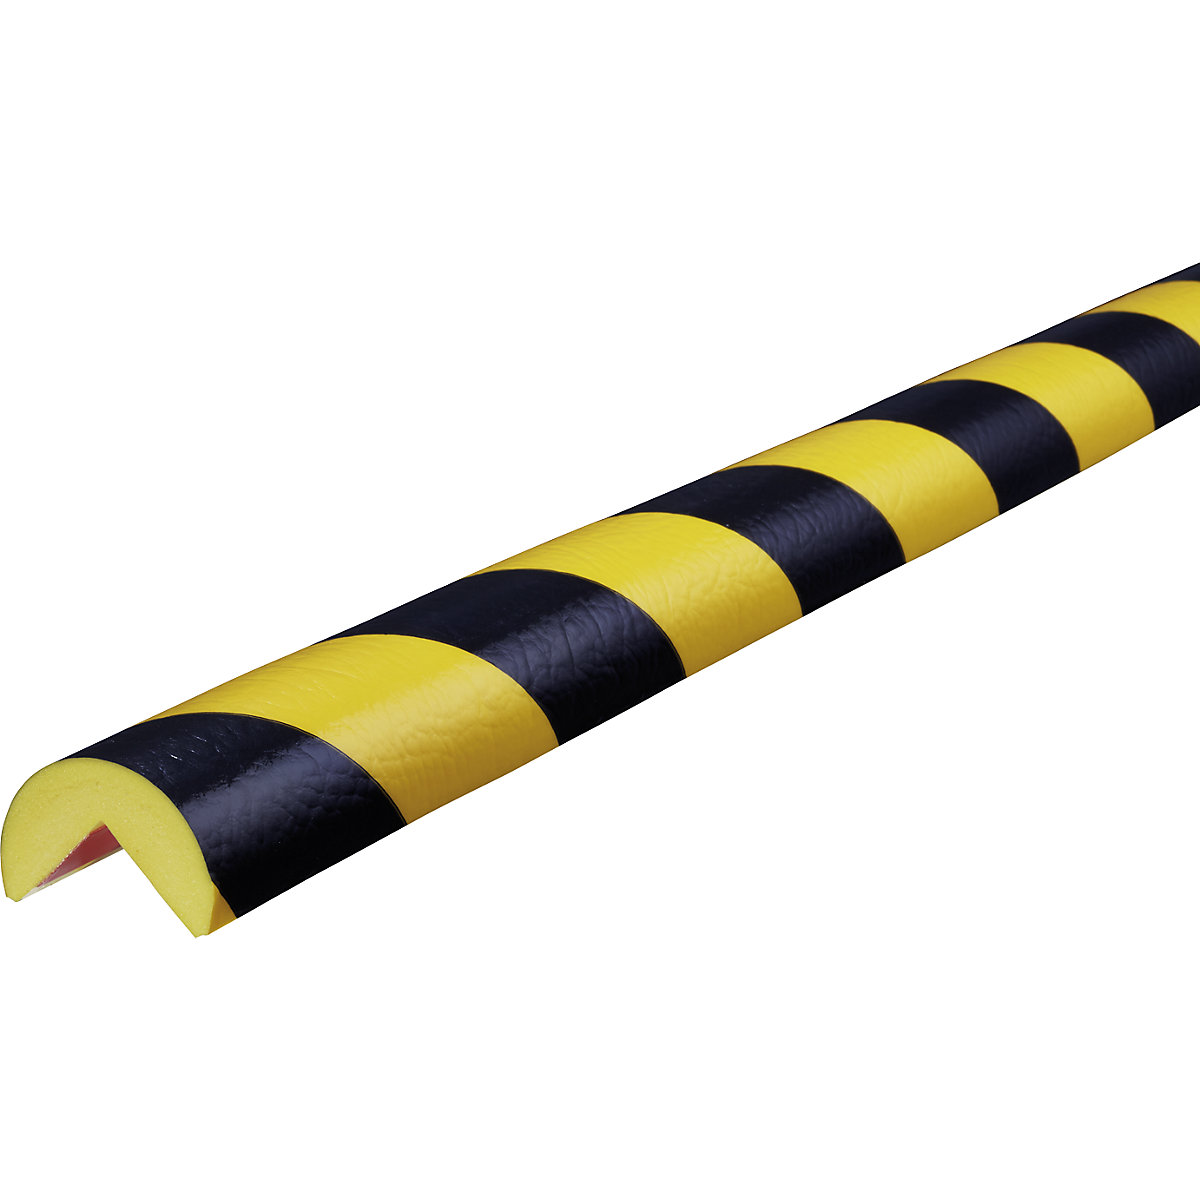 Knuffi® corner protection – SHG, type A, 1 m piece, black / yellow-17